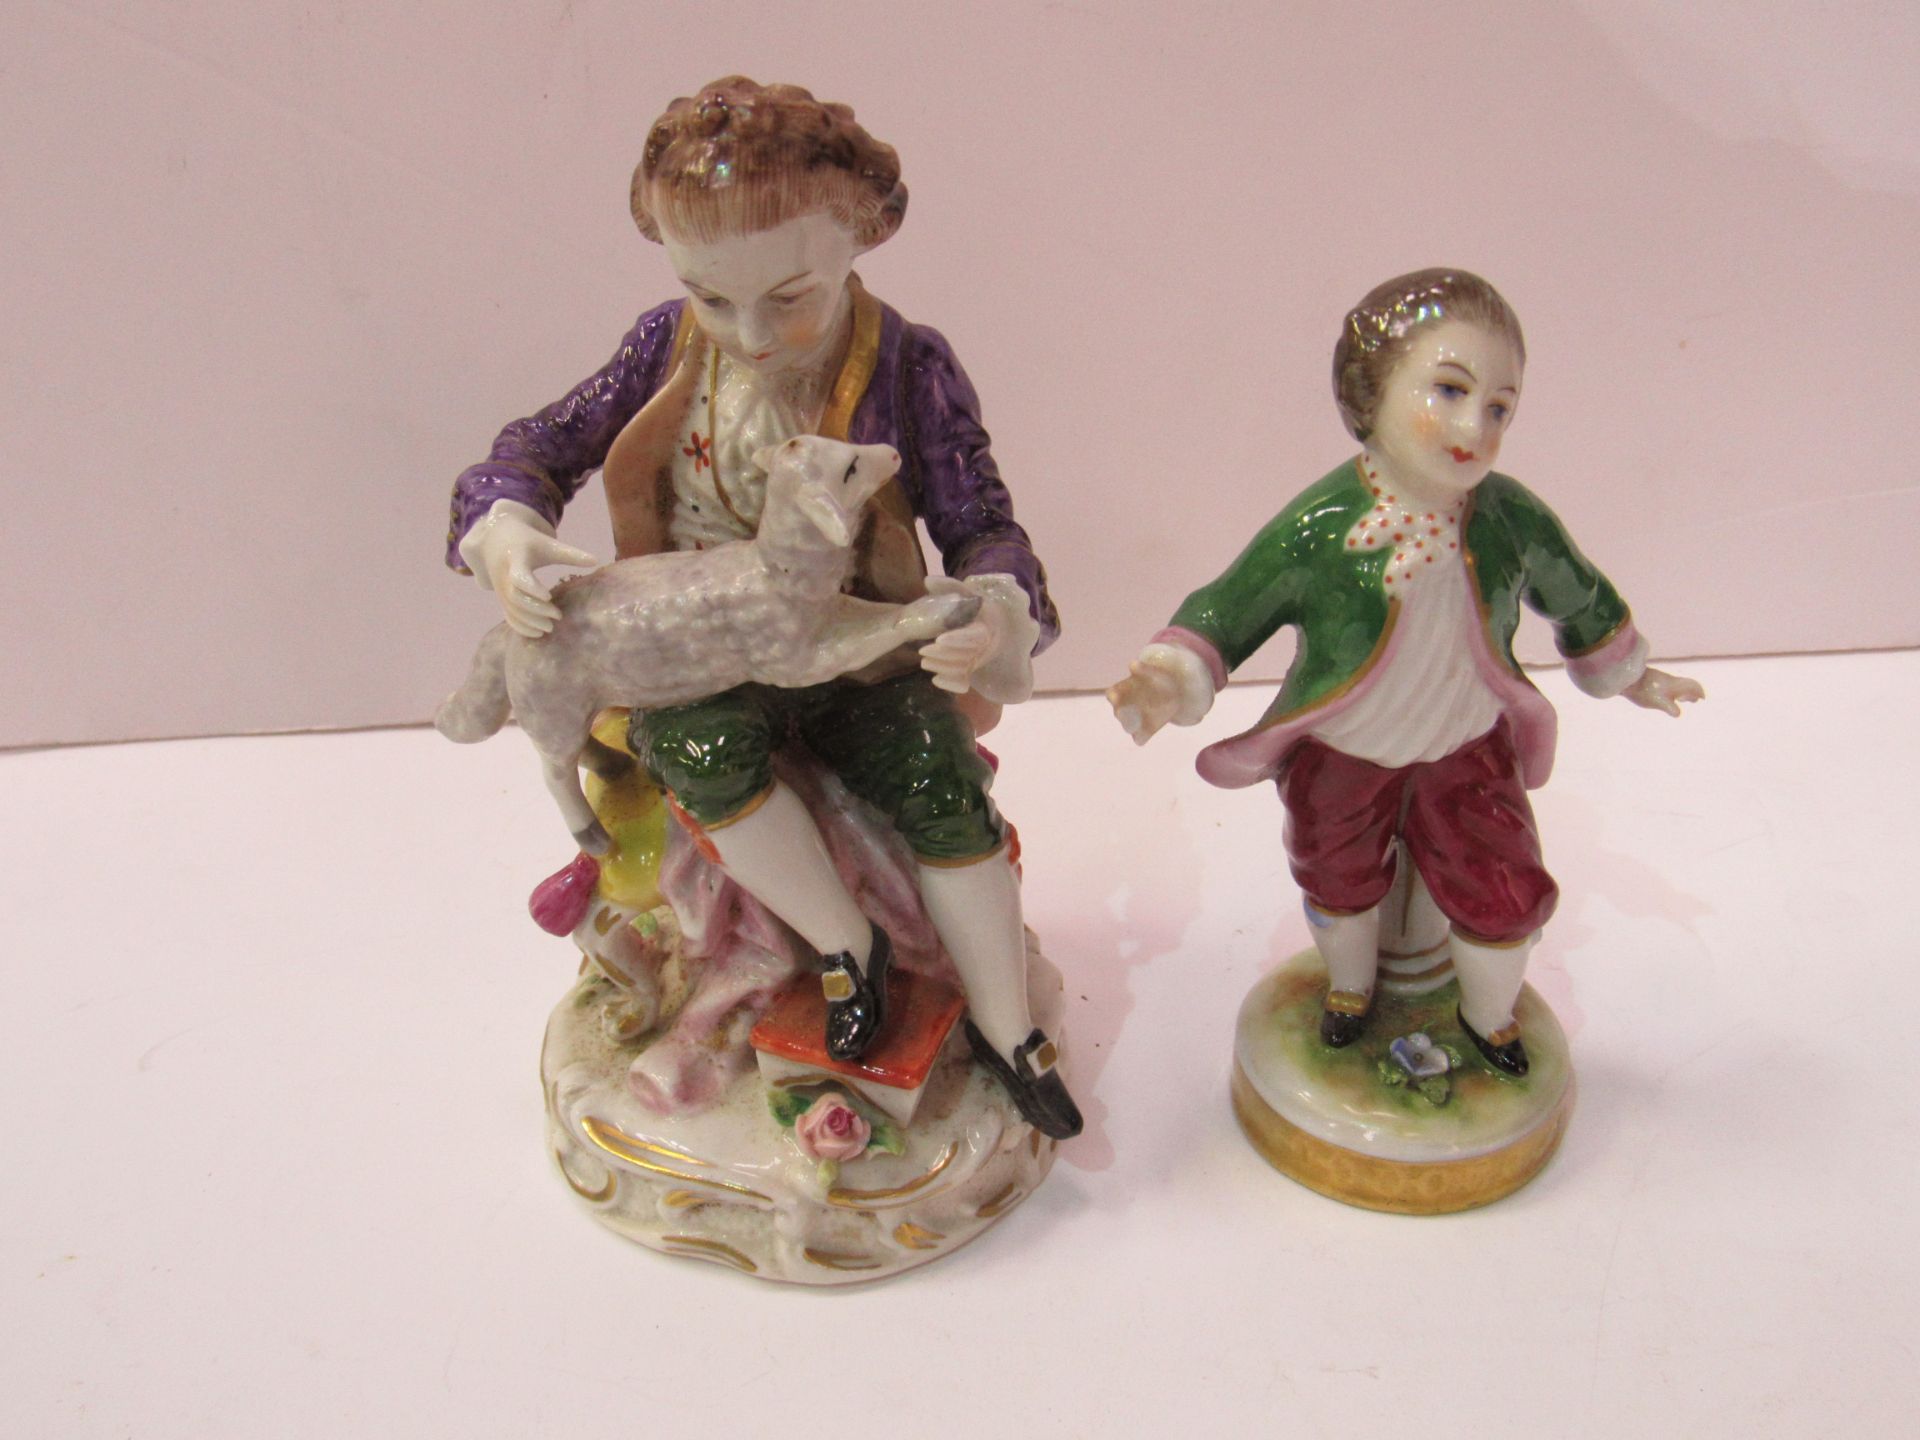 Sitzendorf porcelain boy with lamb figurine together with a Naples porcelain small boy figurine